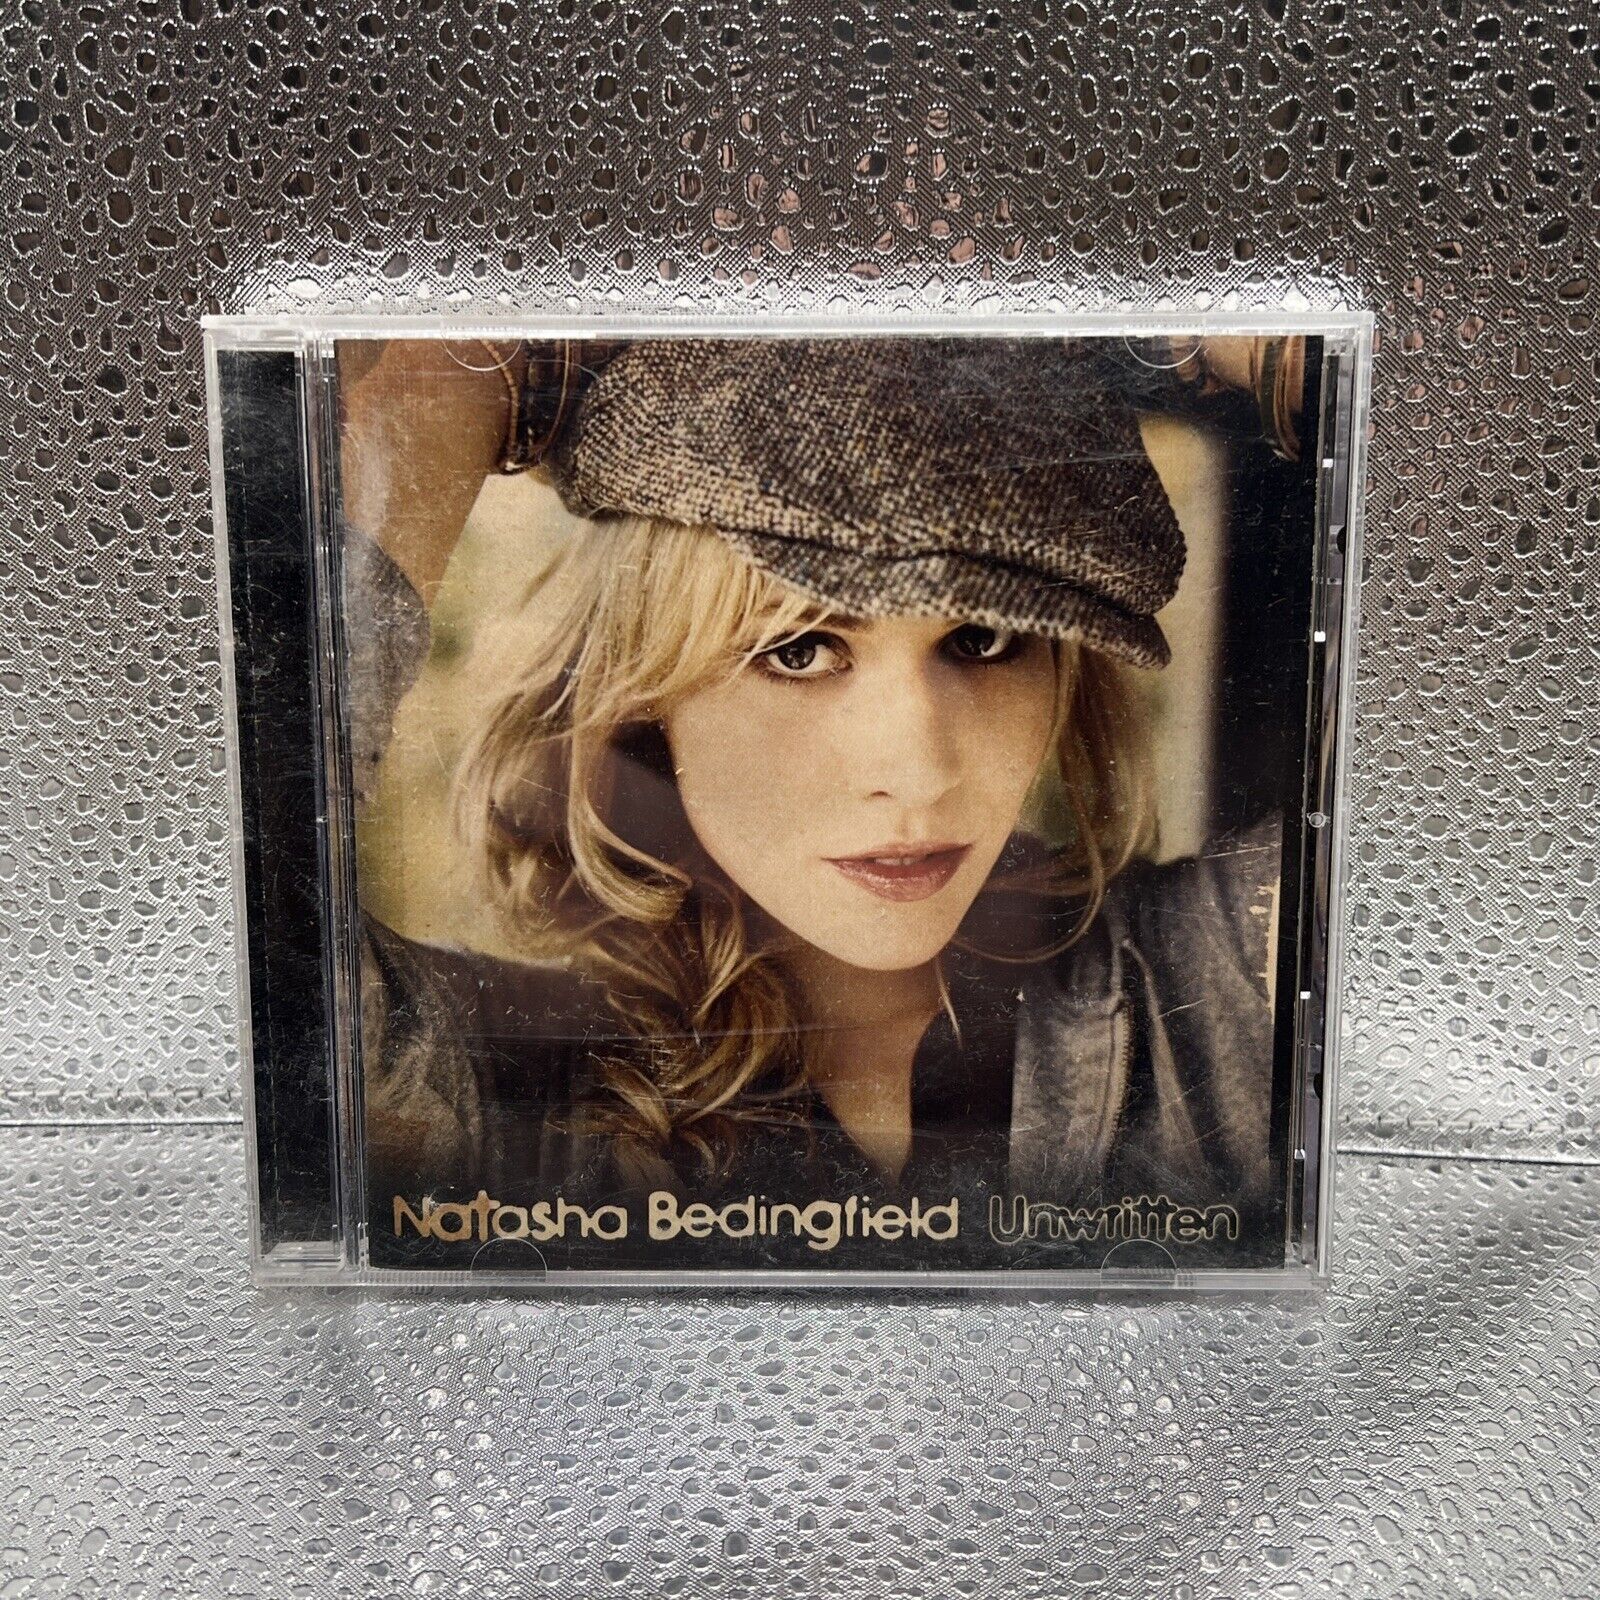 Unwritten by Natasha Bedingfield (CD, 2005, Epic) EX